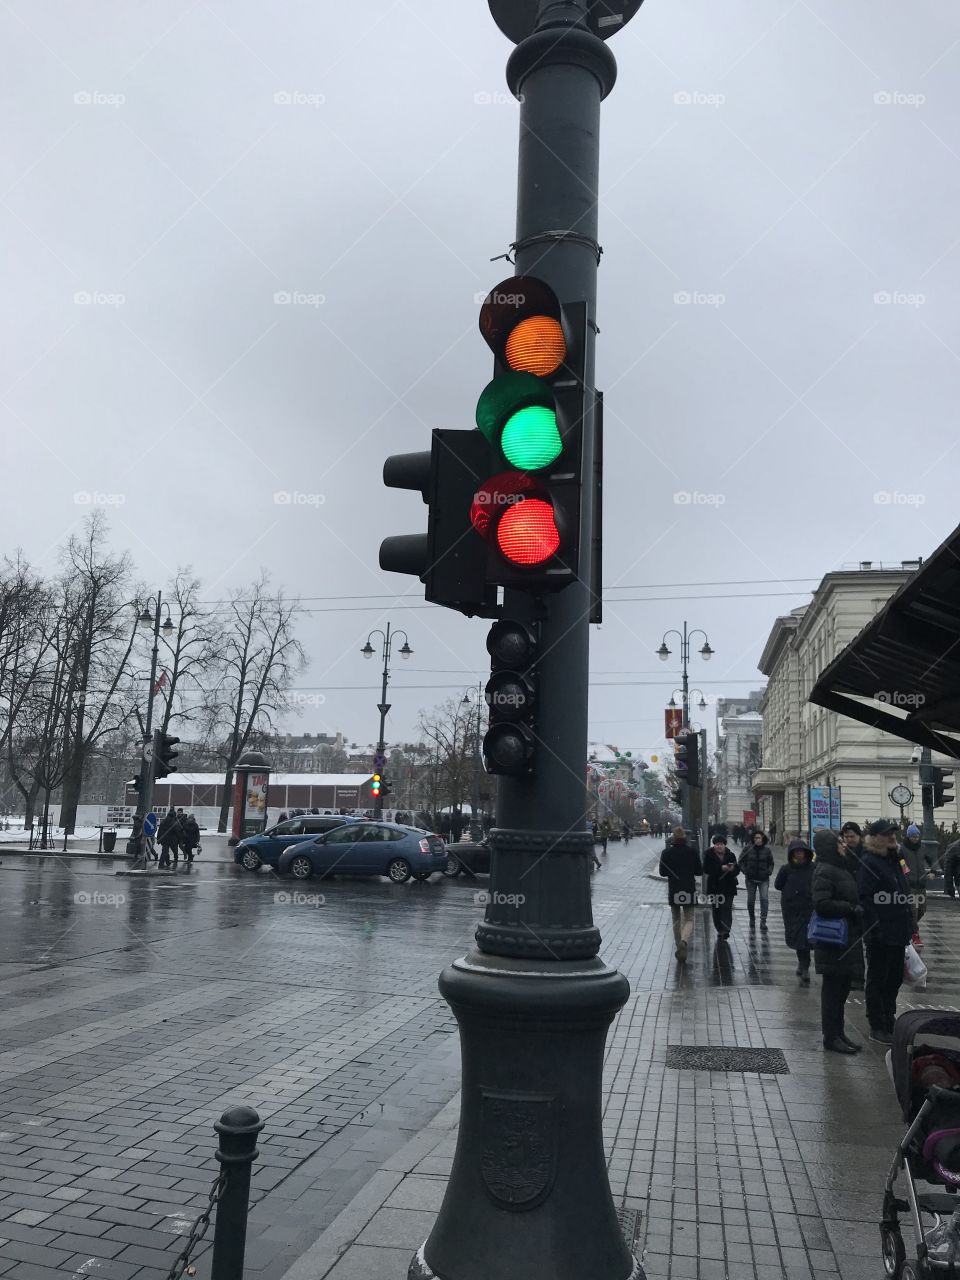 when the traffic light celebrates